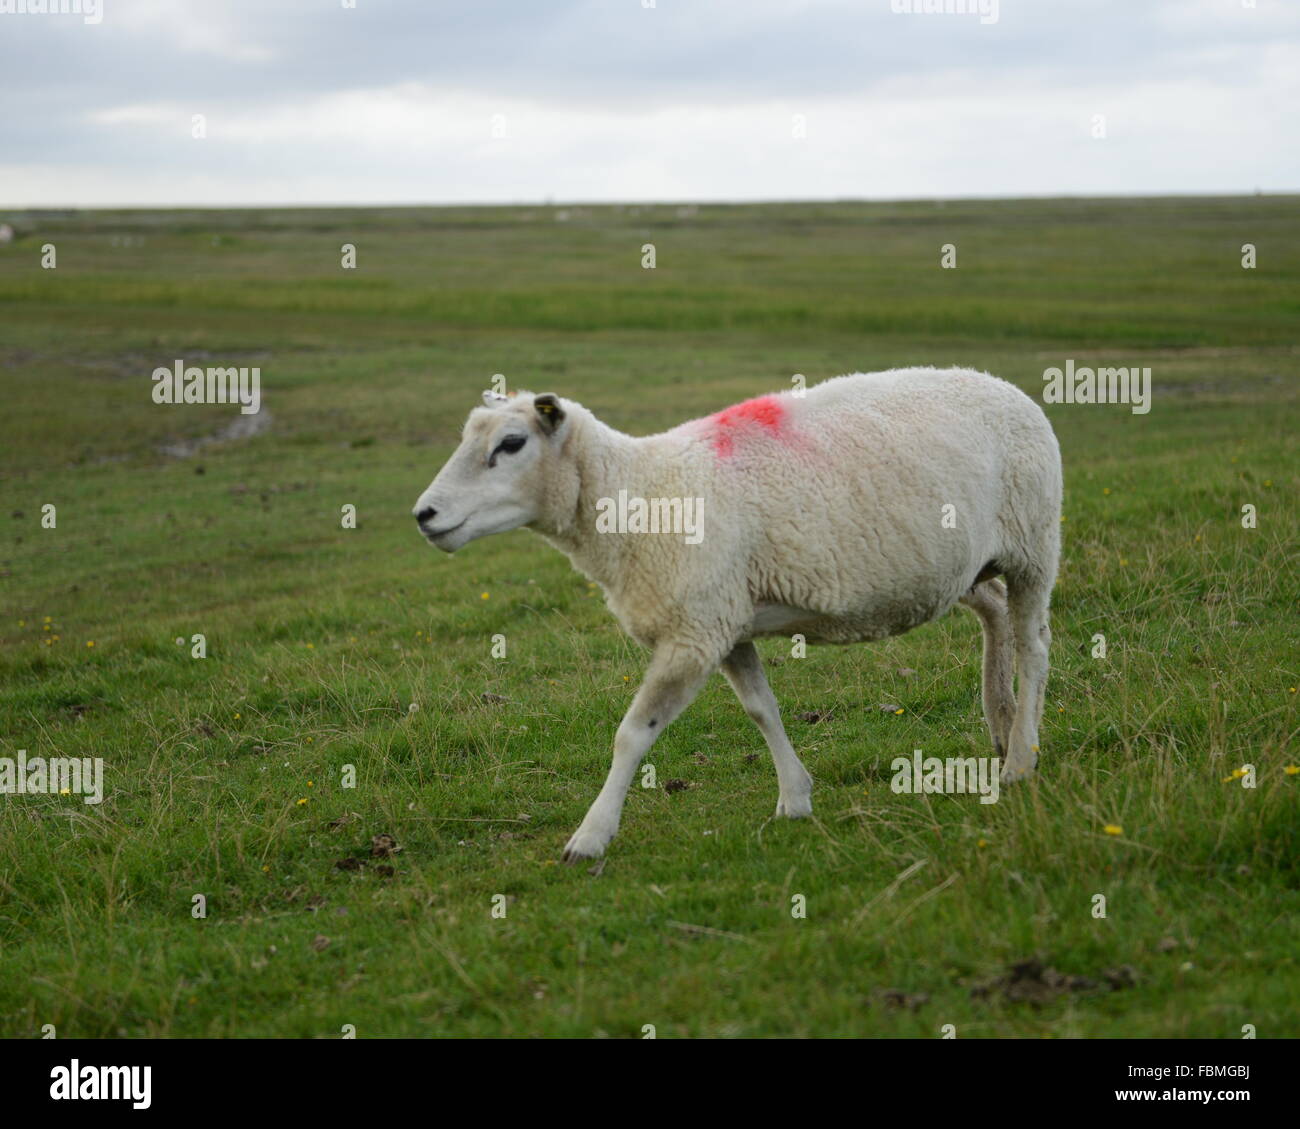 Farm Animal On Grass Stock Photo